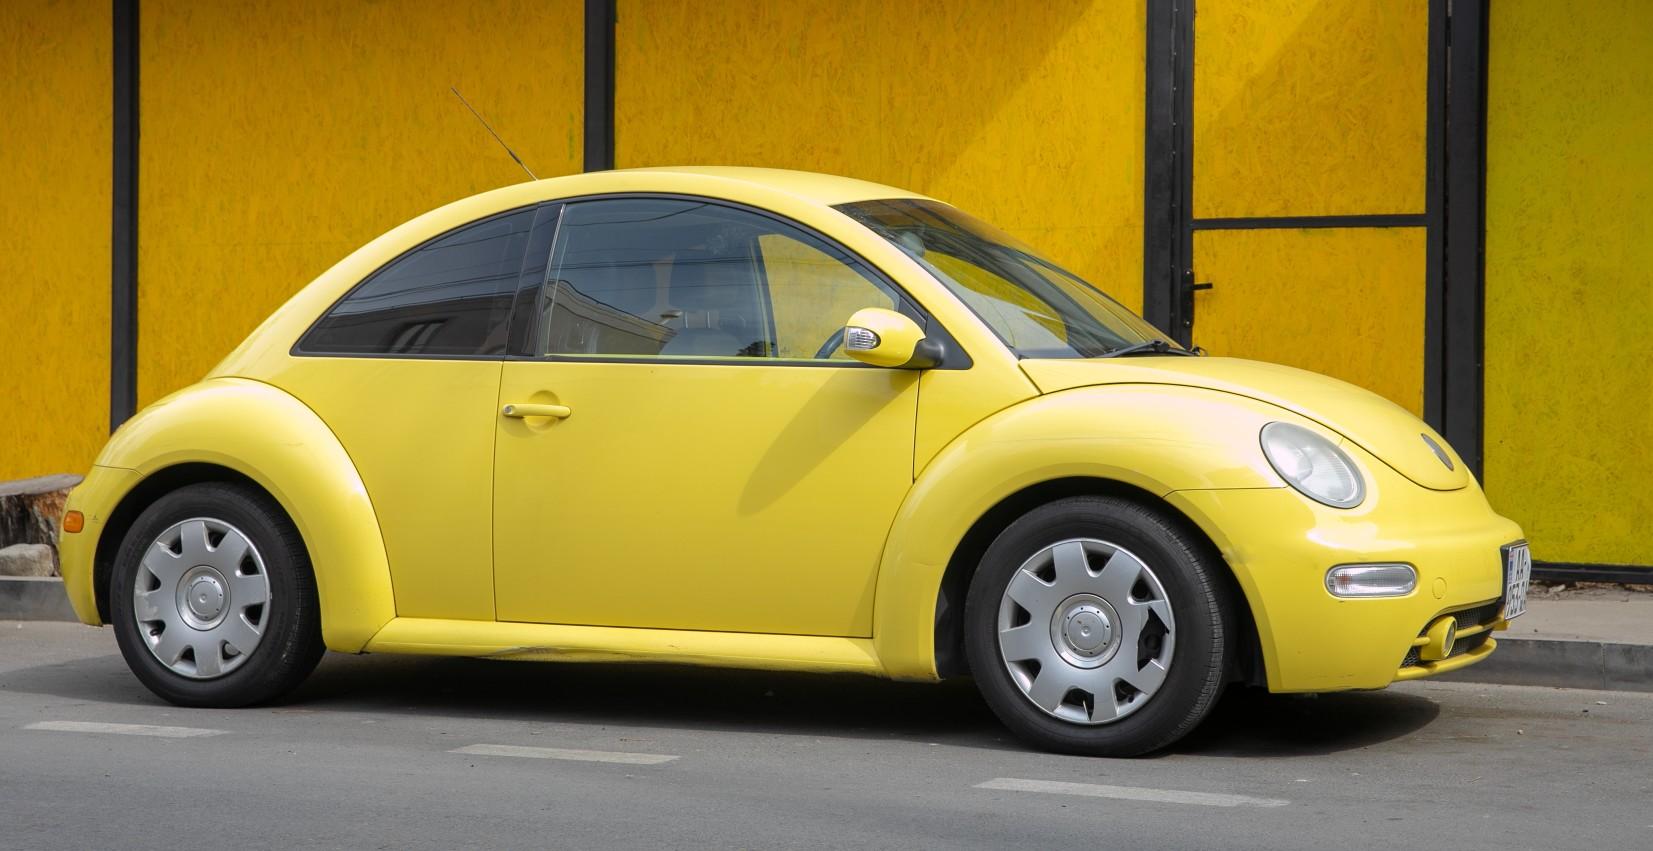 The Volkswagen Beetle has an interesting history. 